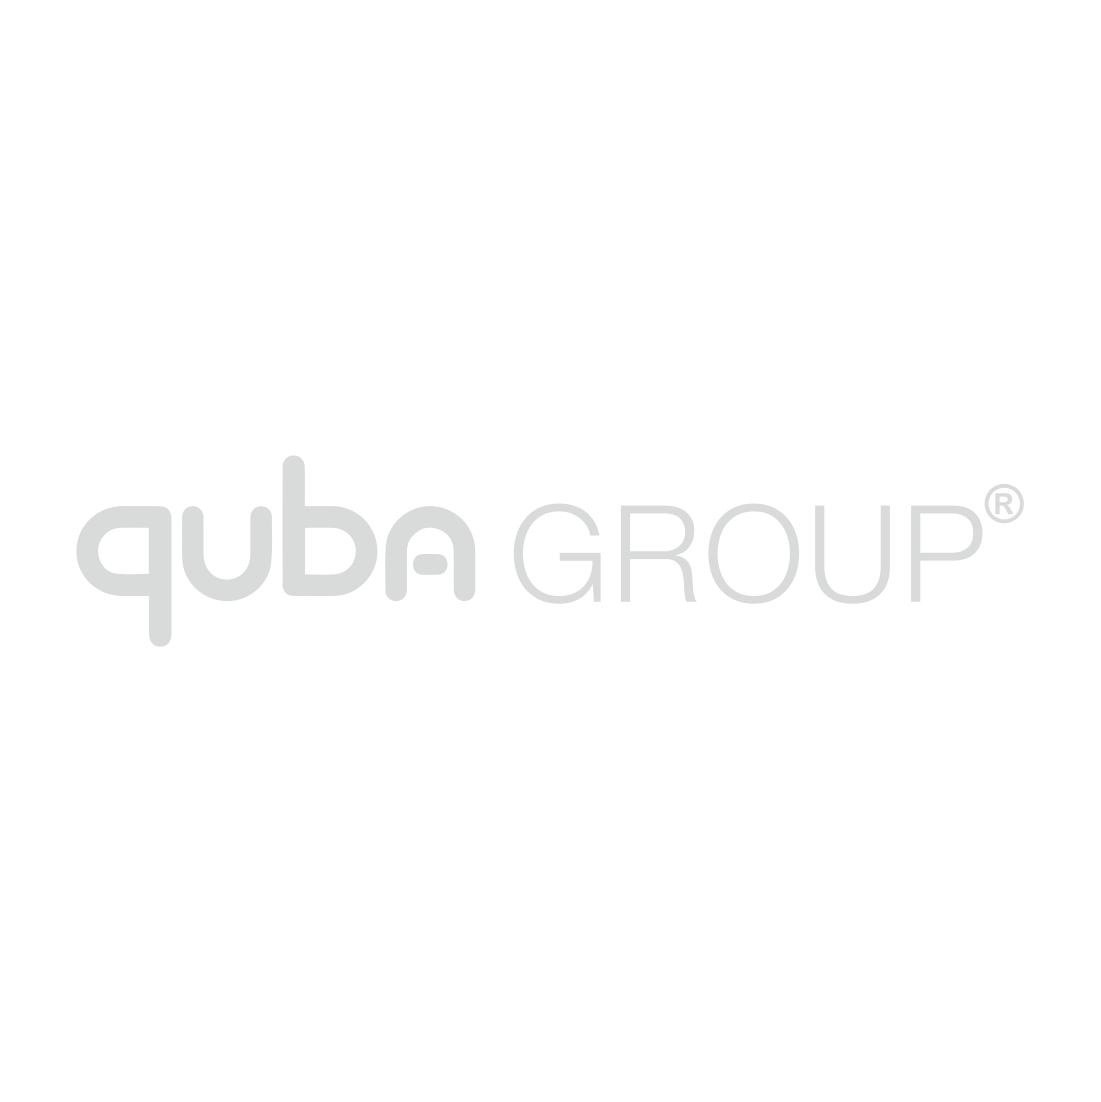 quba group